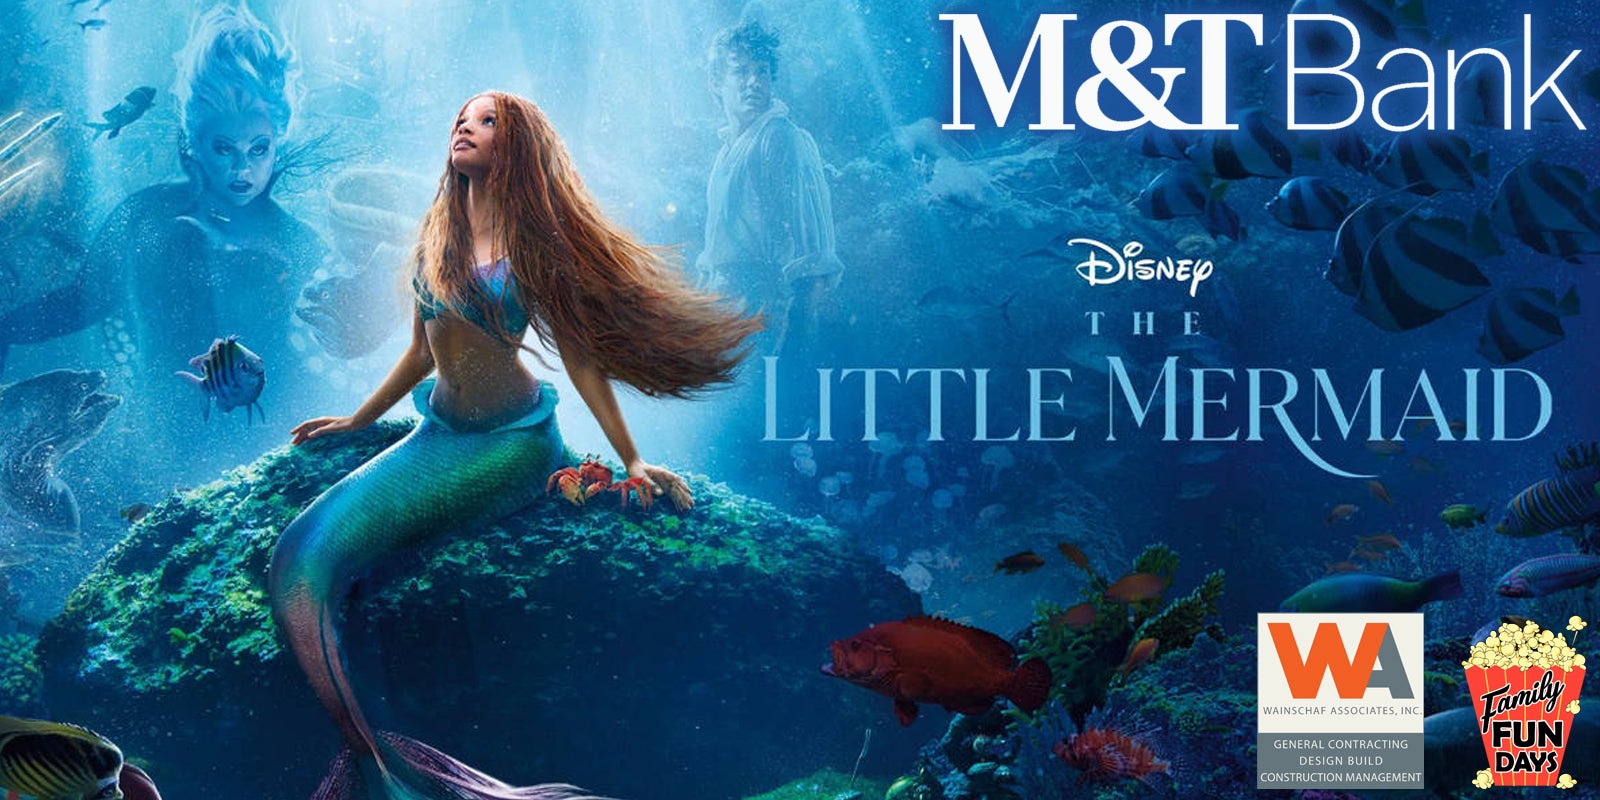 The Little Mermaid at an AMC Theatre near you.